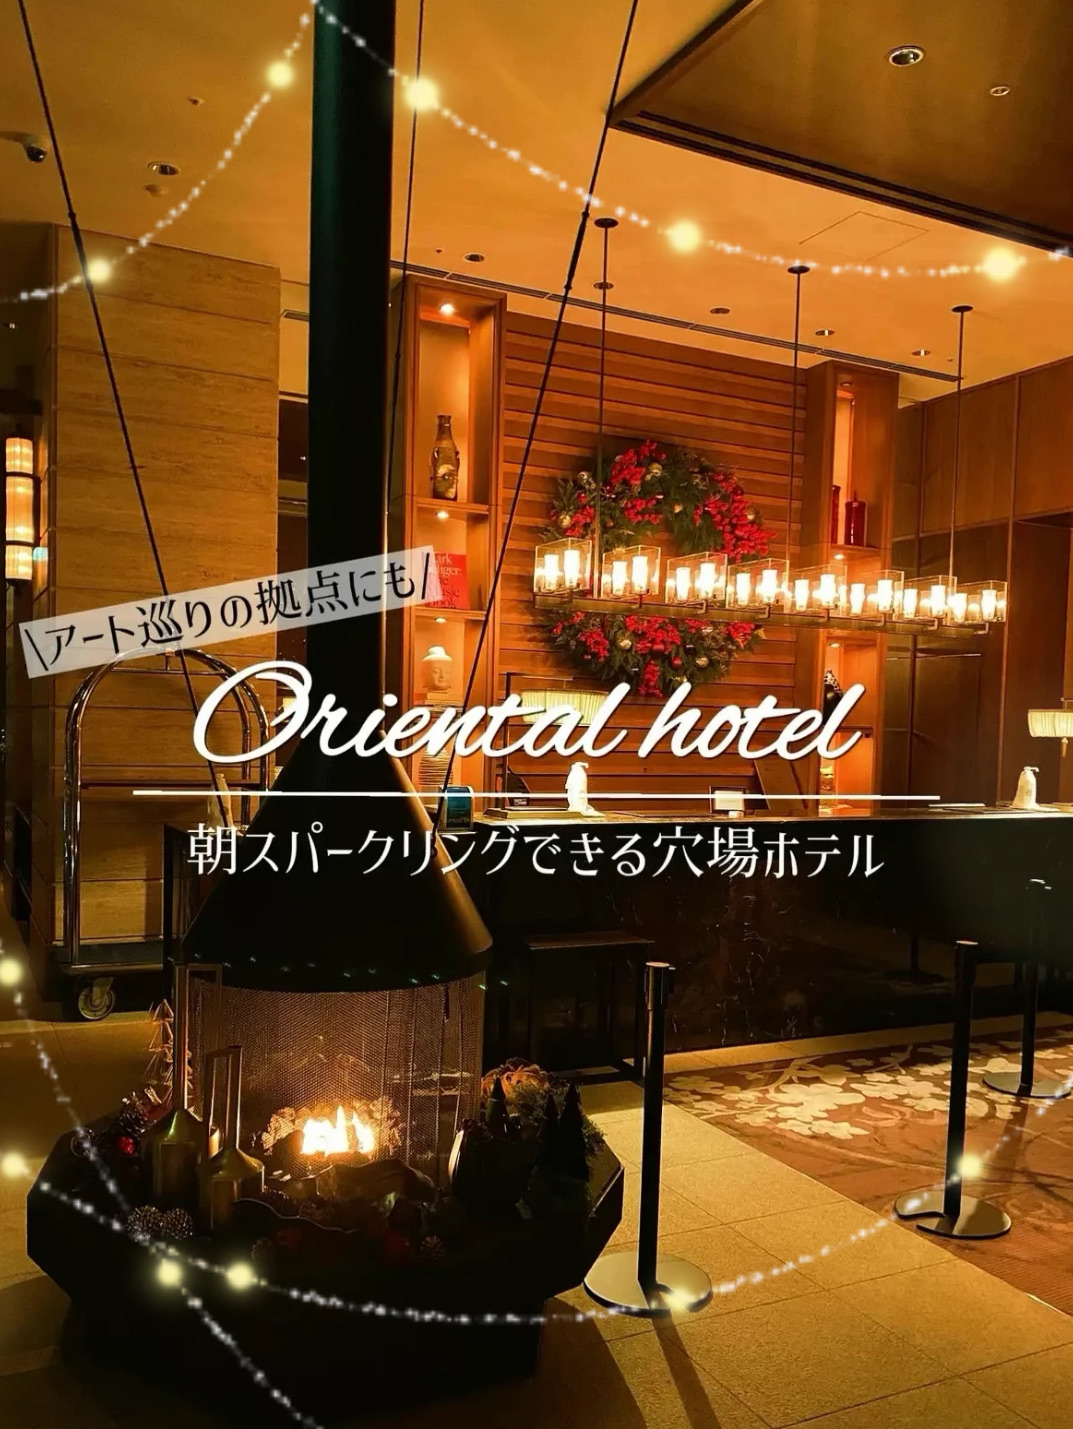 [God Cospa]️早上起泡,每人10,000日元〜🥂✨艺术之旅的最佳酒店💫